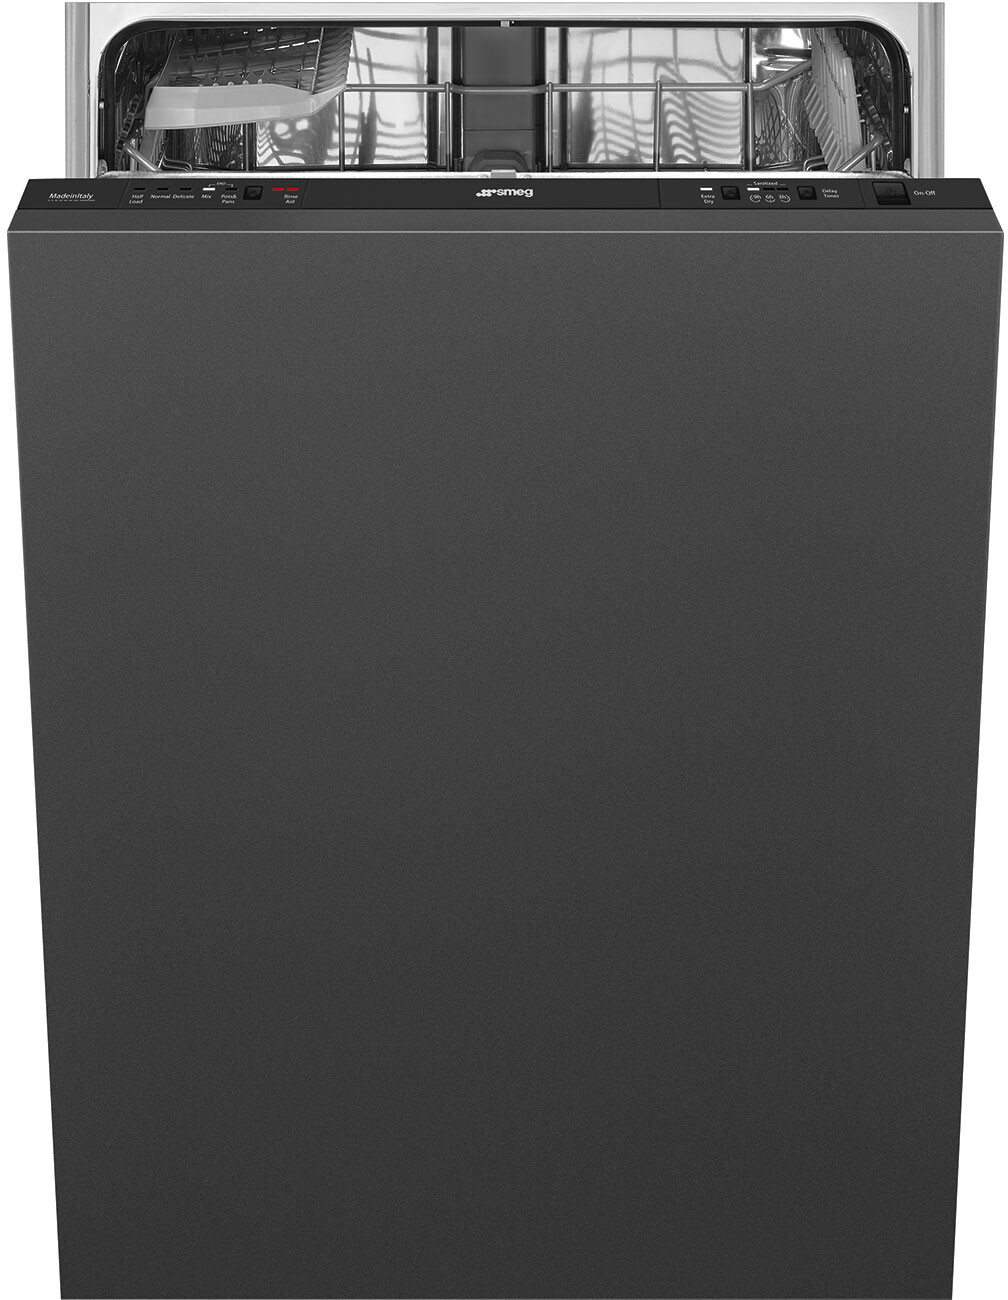 Smeg Classic Design 24 Fully Integrated Built In Dishwasher STU8612